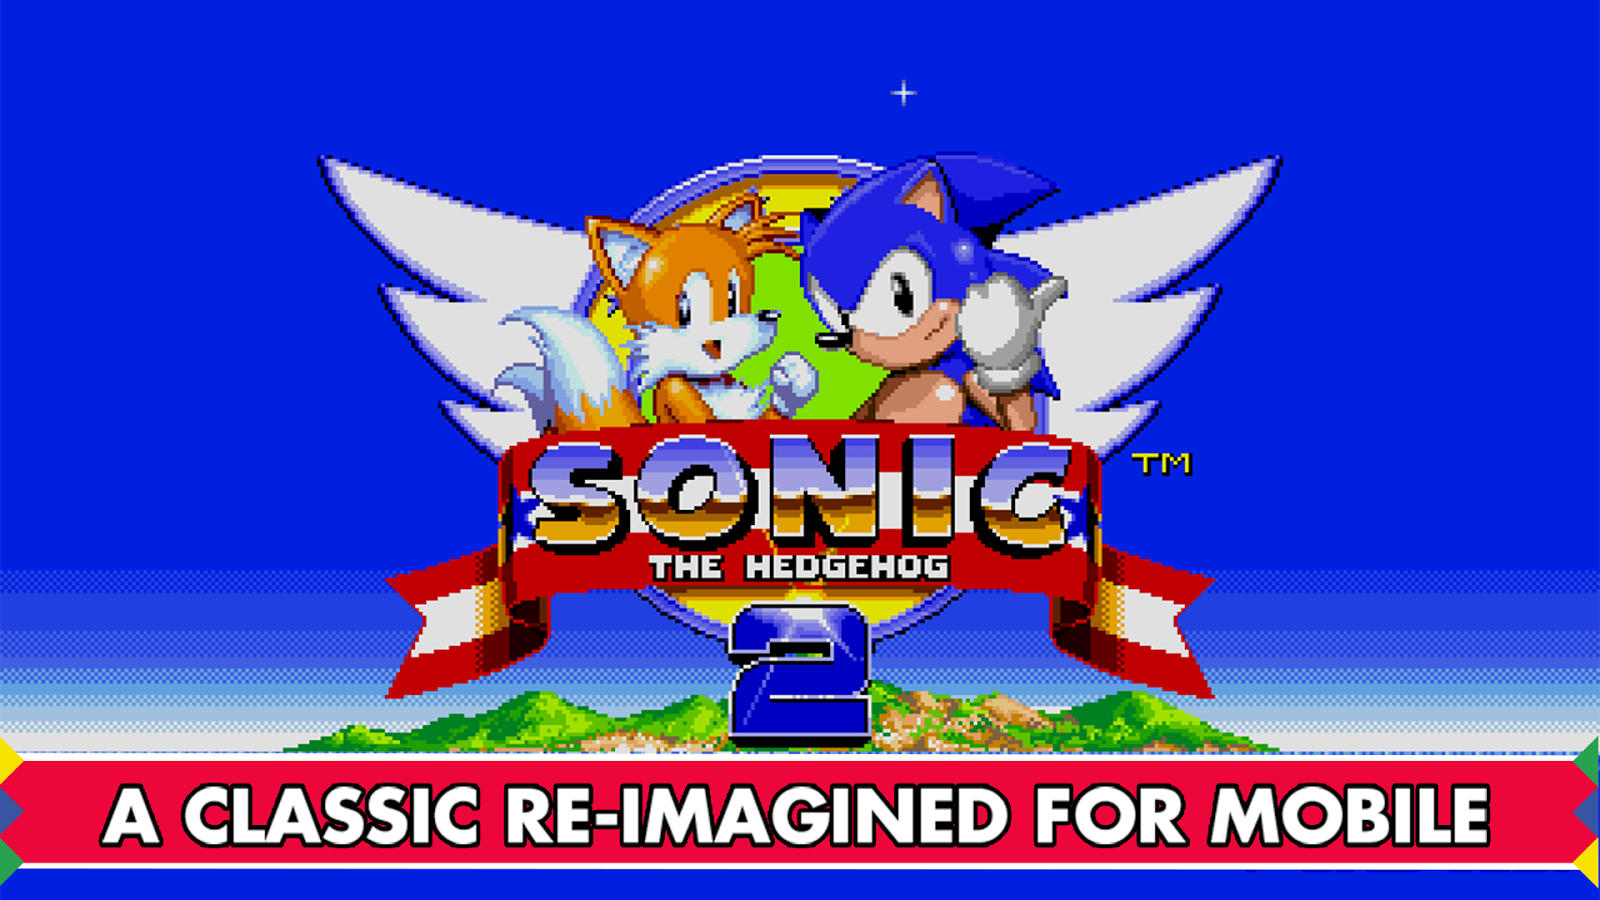  لعبه Sonic The Hedgehog 2 v.3.1.5 مدفوعه كامله PYenvBD0jyeXaFy7tfd1-DajFXeWLtgFj9LxLx7rlbHZAzOxokDD7JgaO-XZST1CmC4=h900-rw